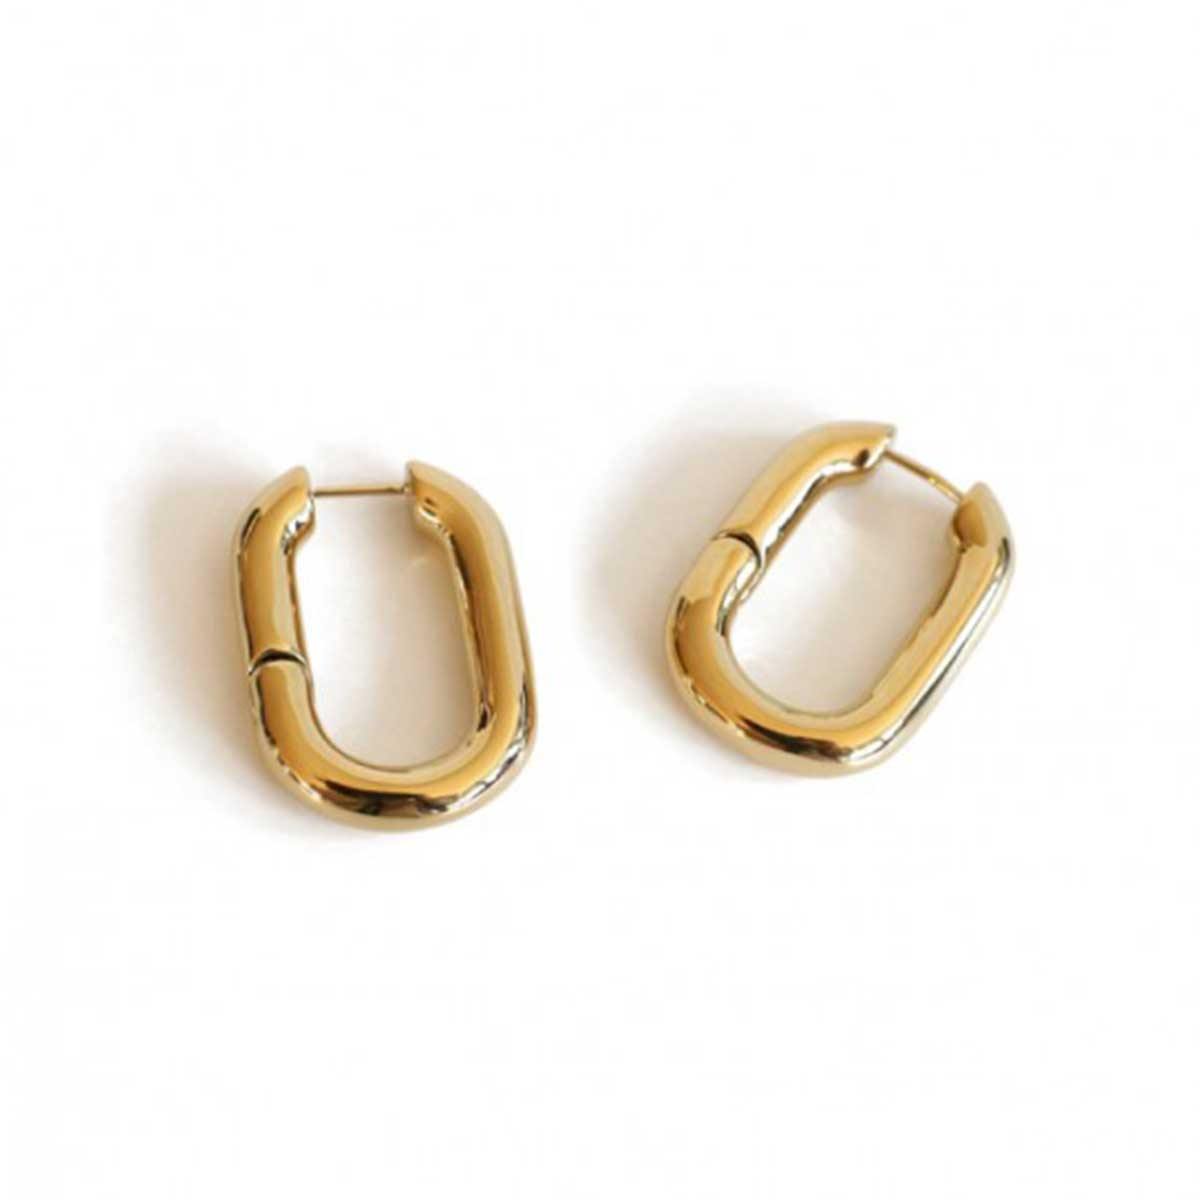 Latest Designed Gold Earrings Under 5000 Review (2gm , 22k) - YouTube